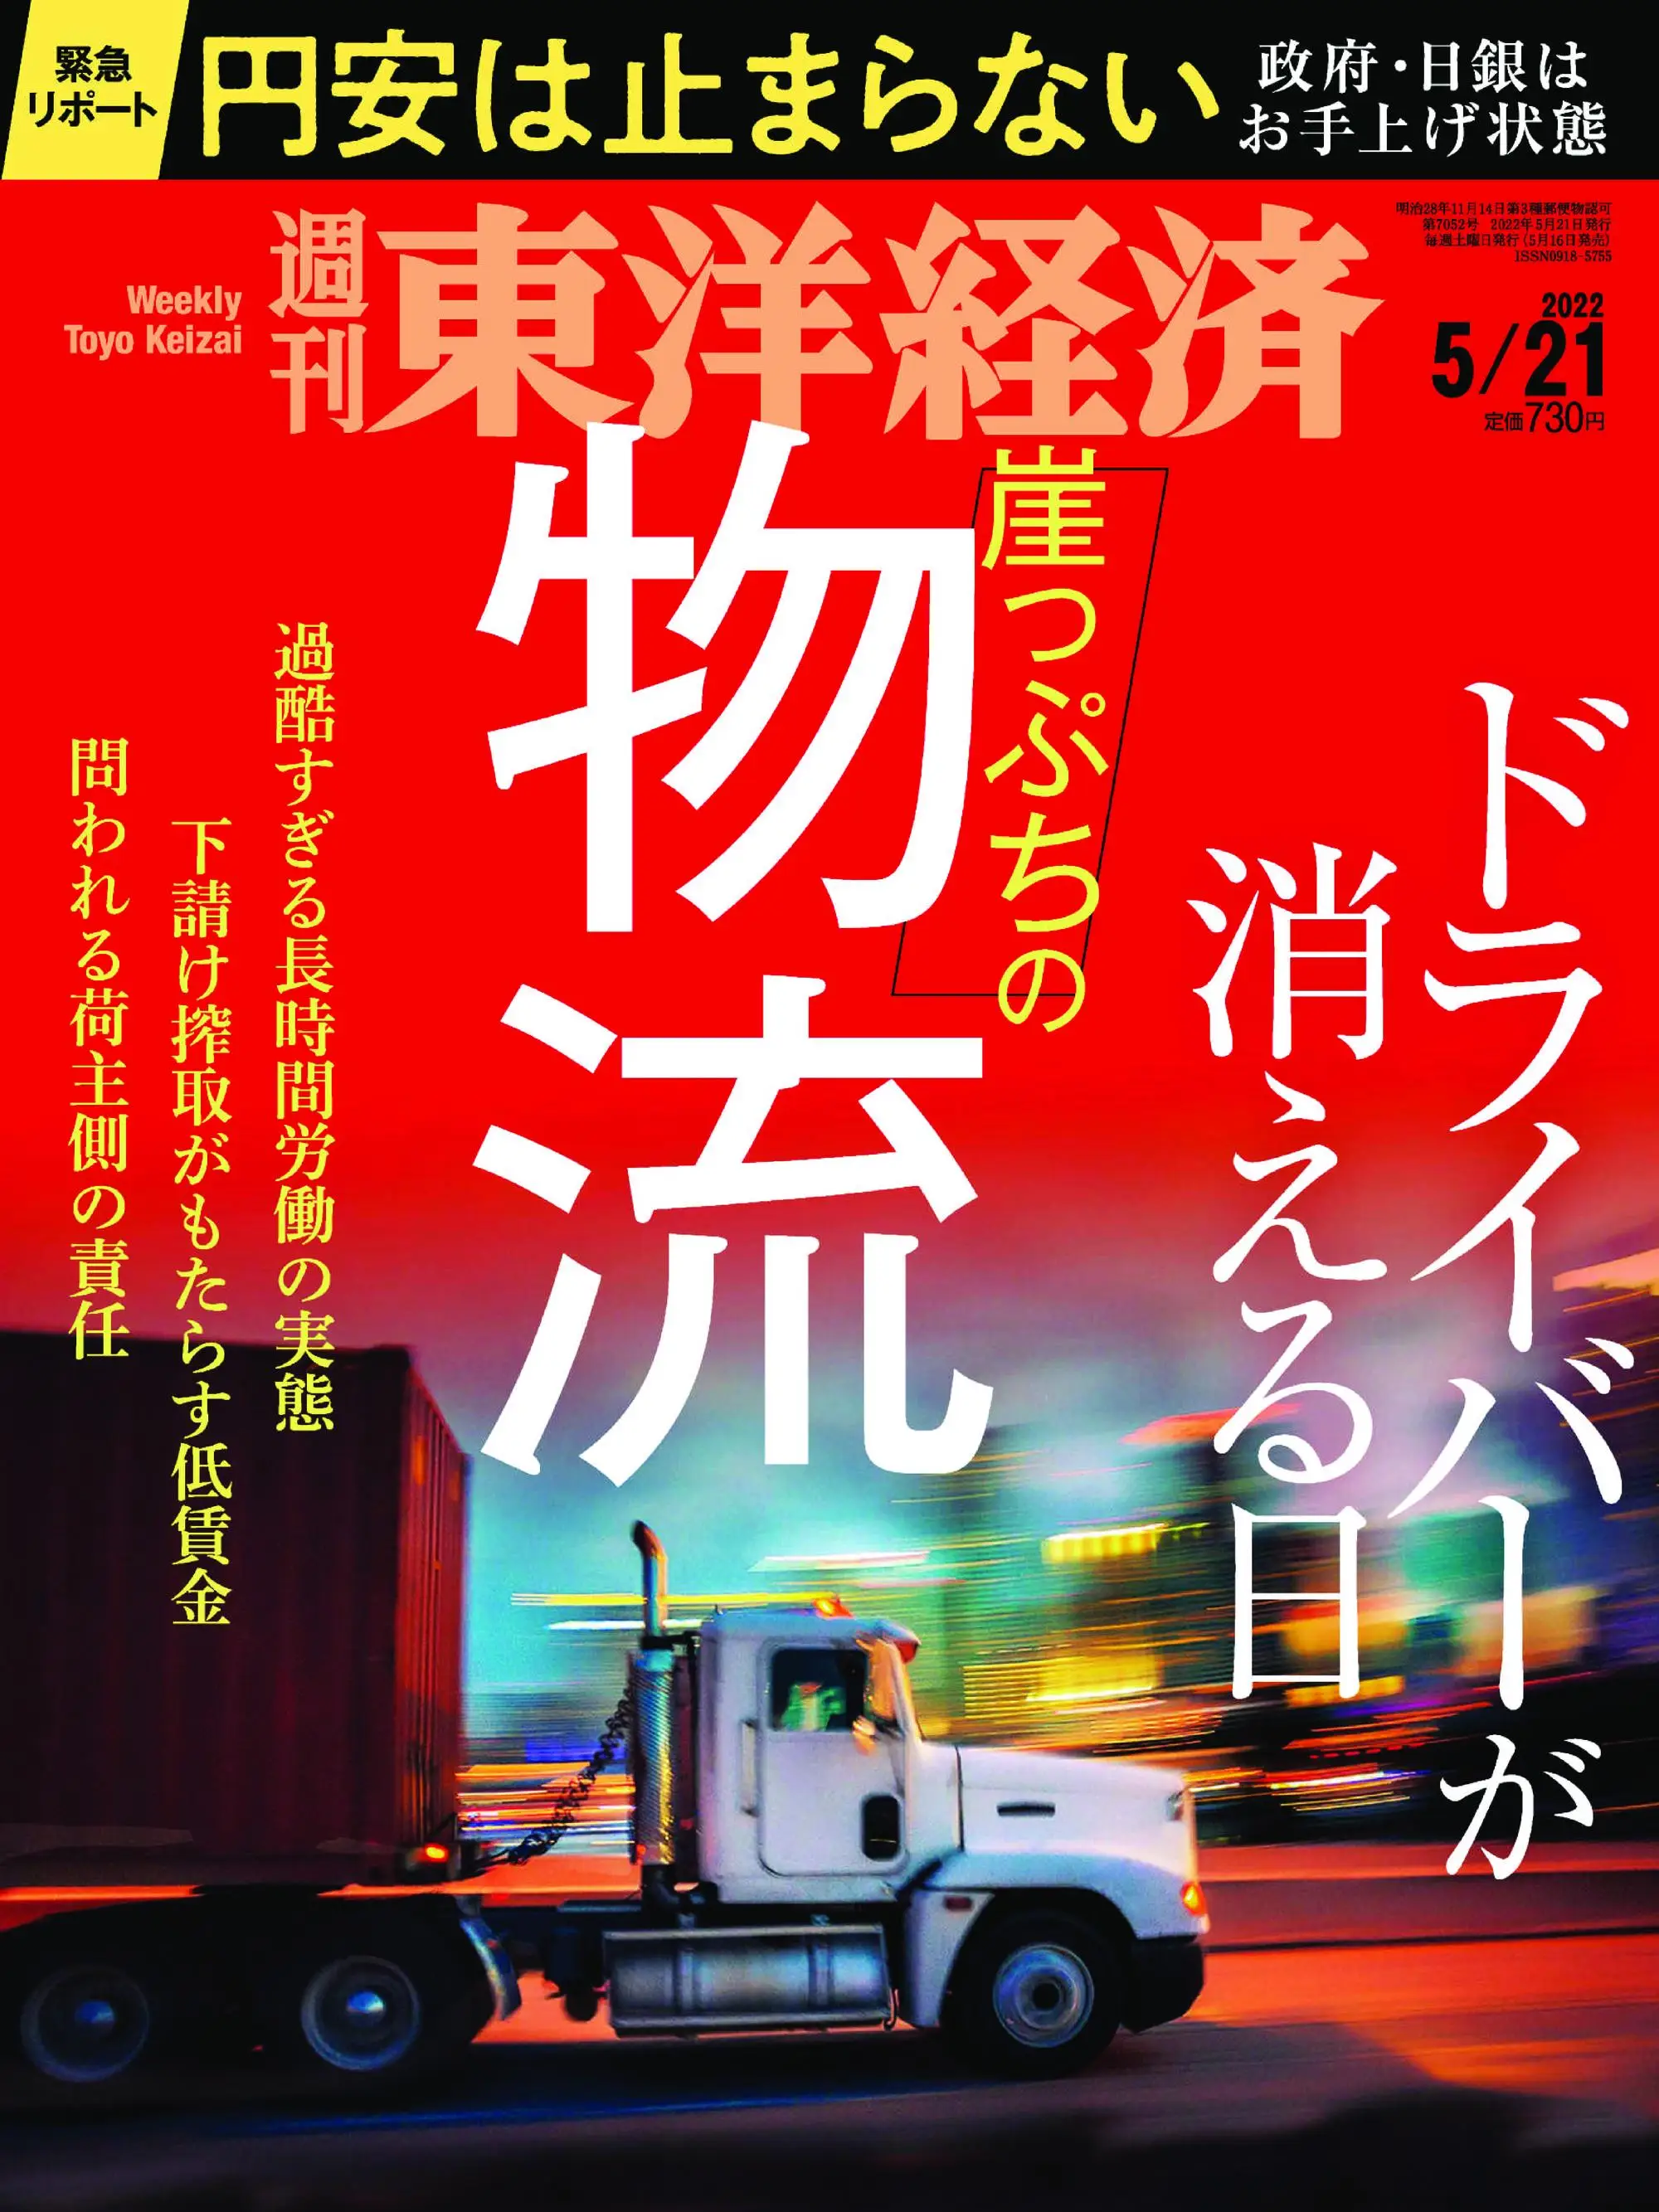 Weekly Toyo Keizai 週刊東洋経済 - 16 5月 2022